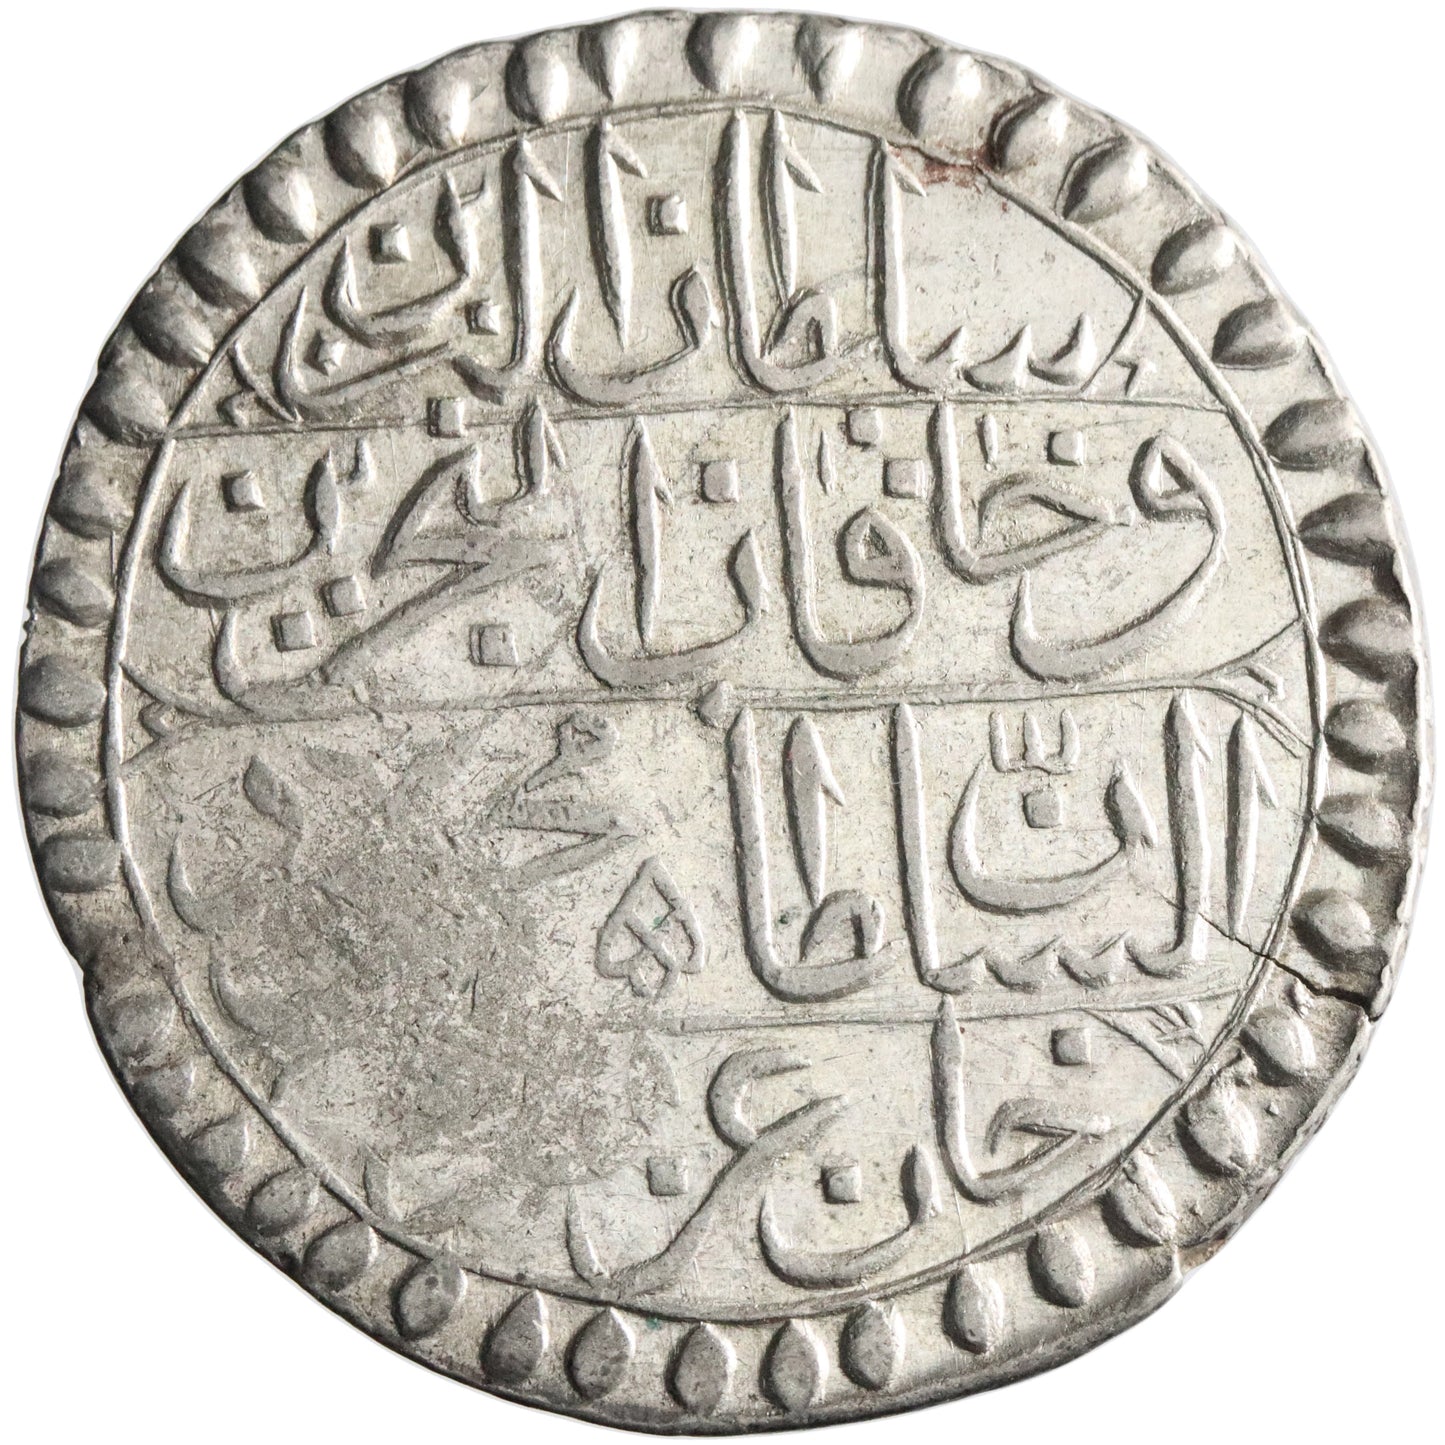 Ottoman, Mahmud II, silver piastre, Tunis (Tunisia) mint, AH 1240